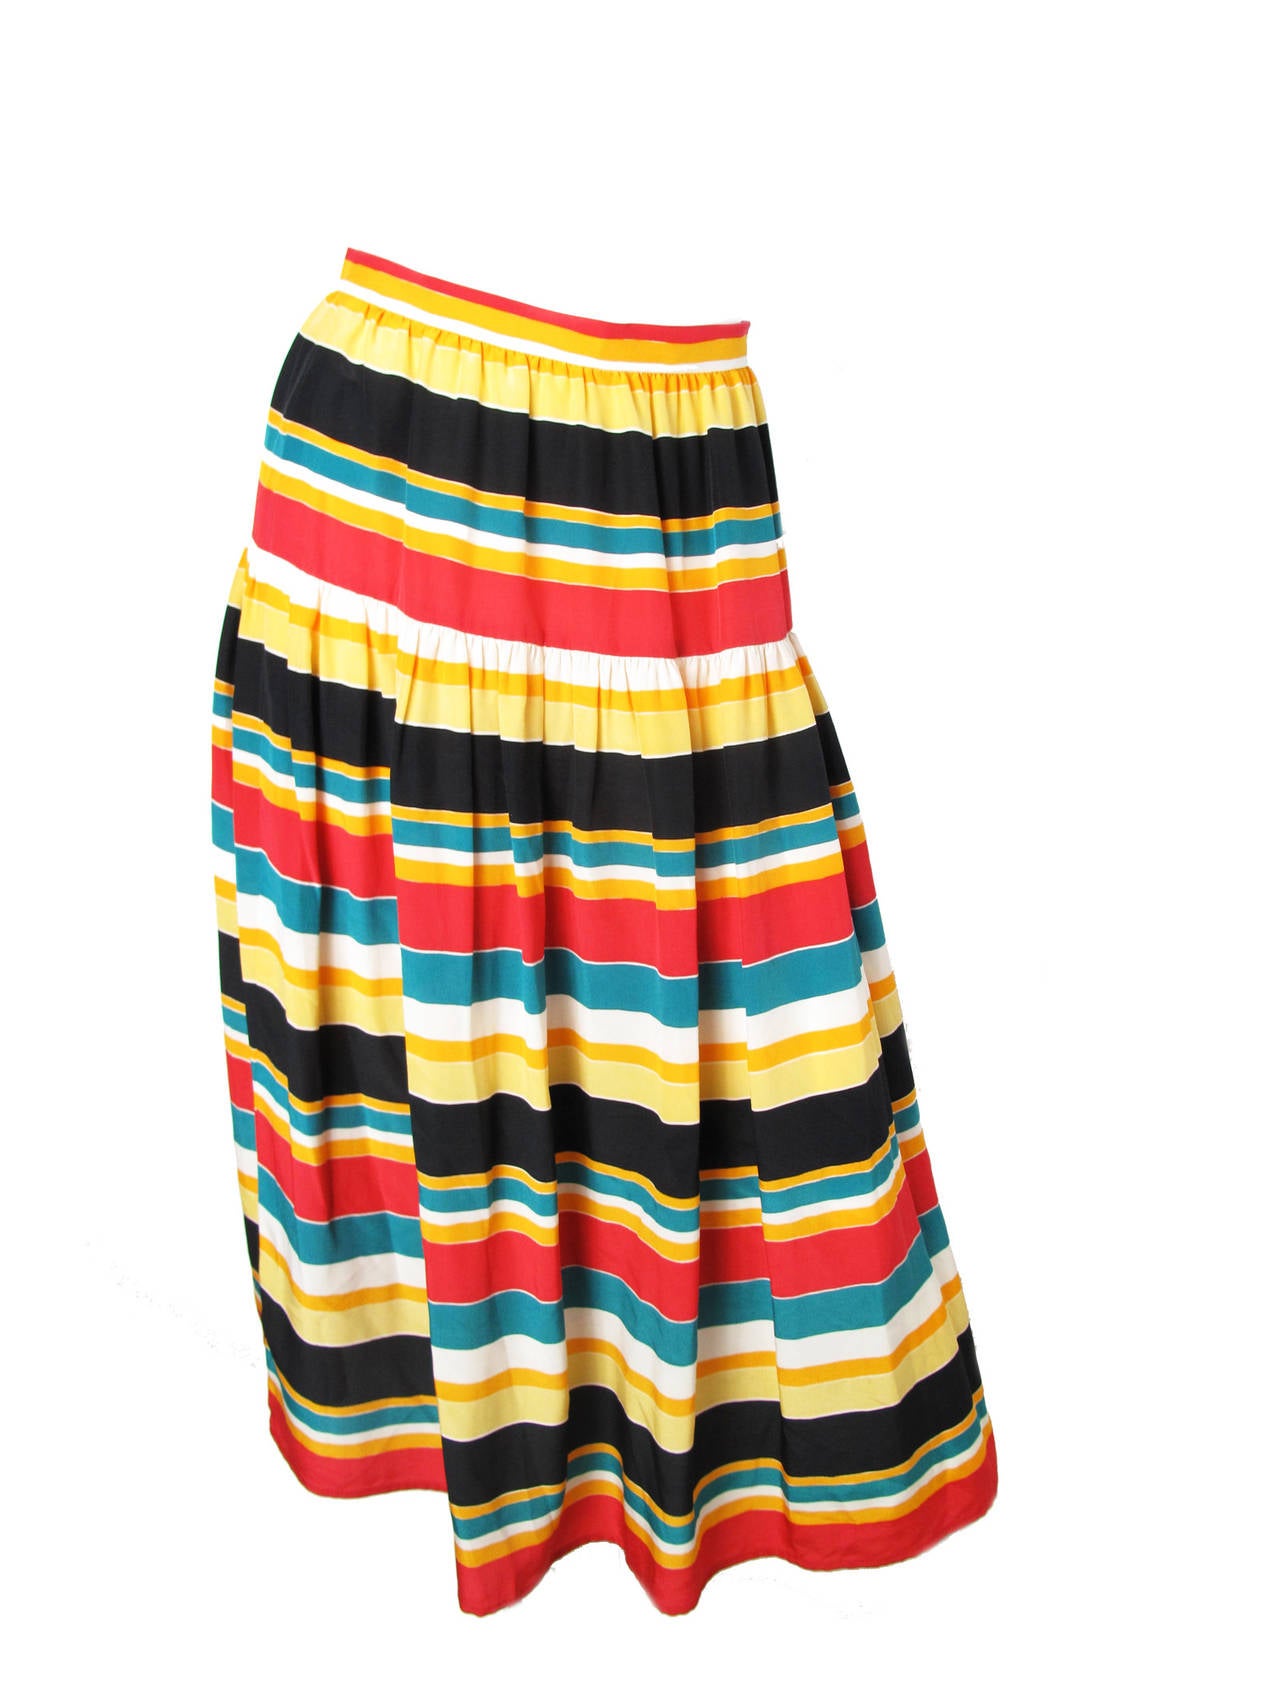 Oscar de la Renta silk striped skirt with cotton peasant blouse.  

Skirt: 25